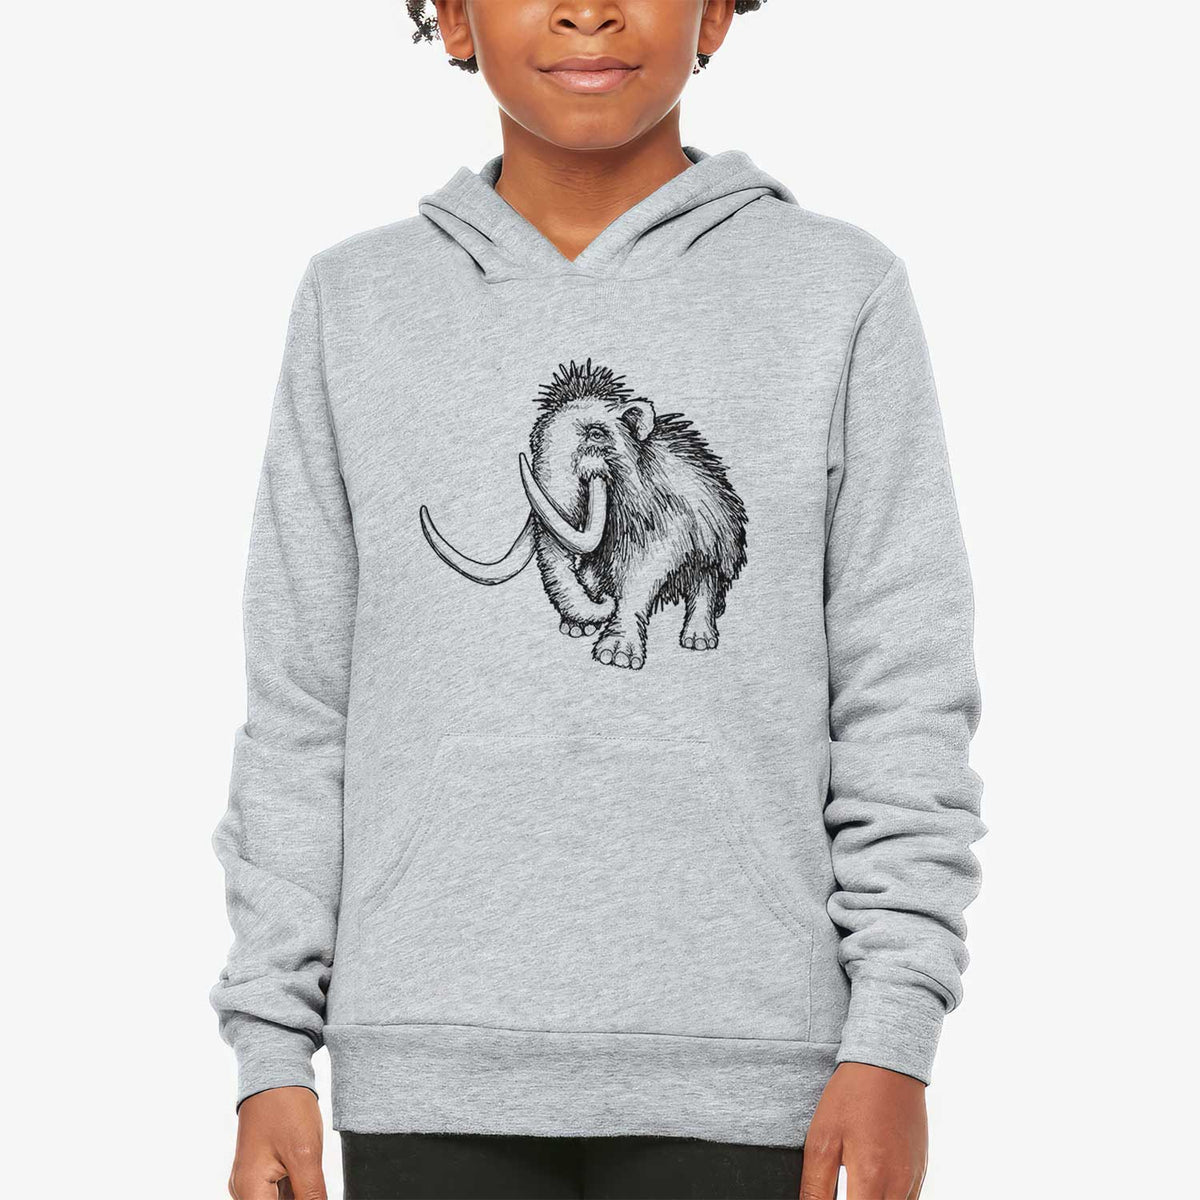 Woolly Mammoth - Mammuthus Primigenius - Youth Hoodie Sweatshirt